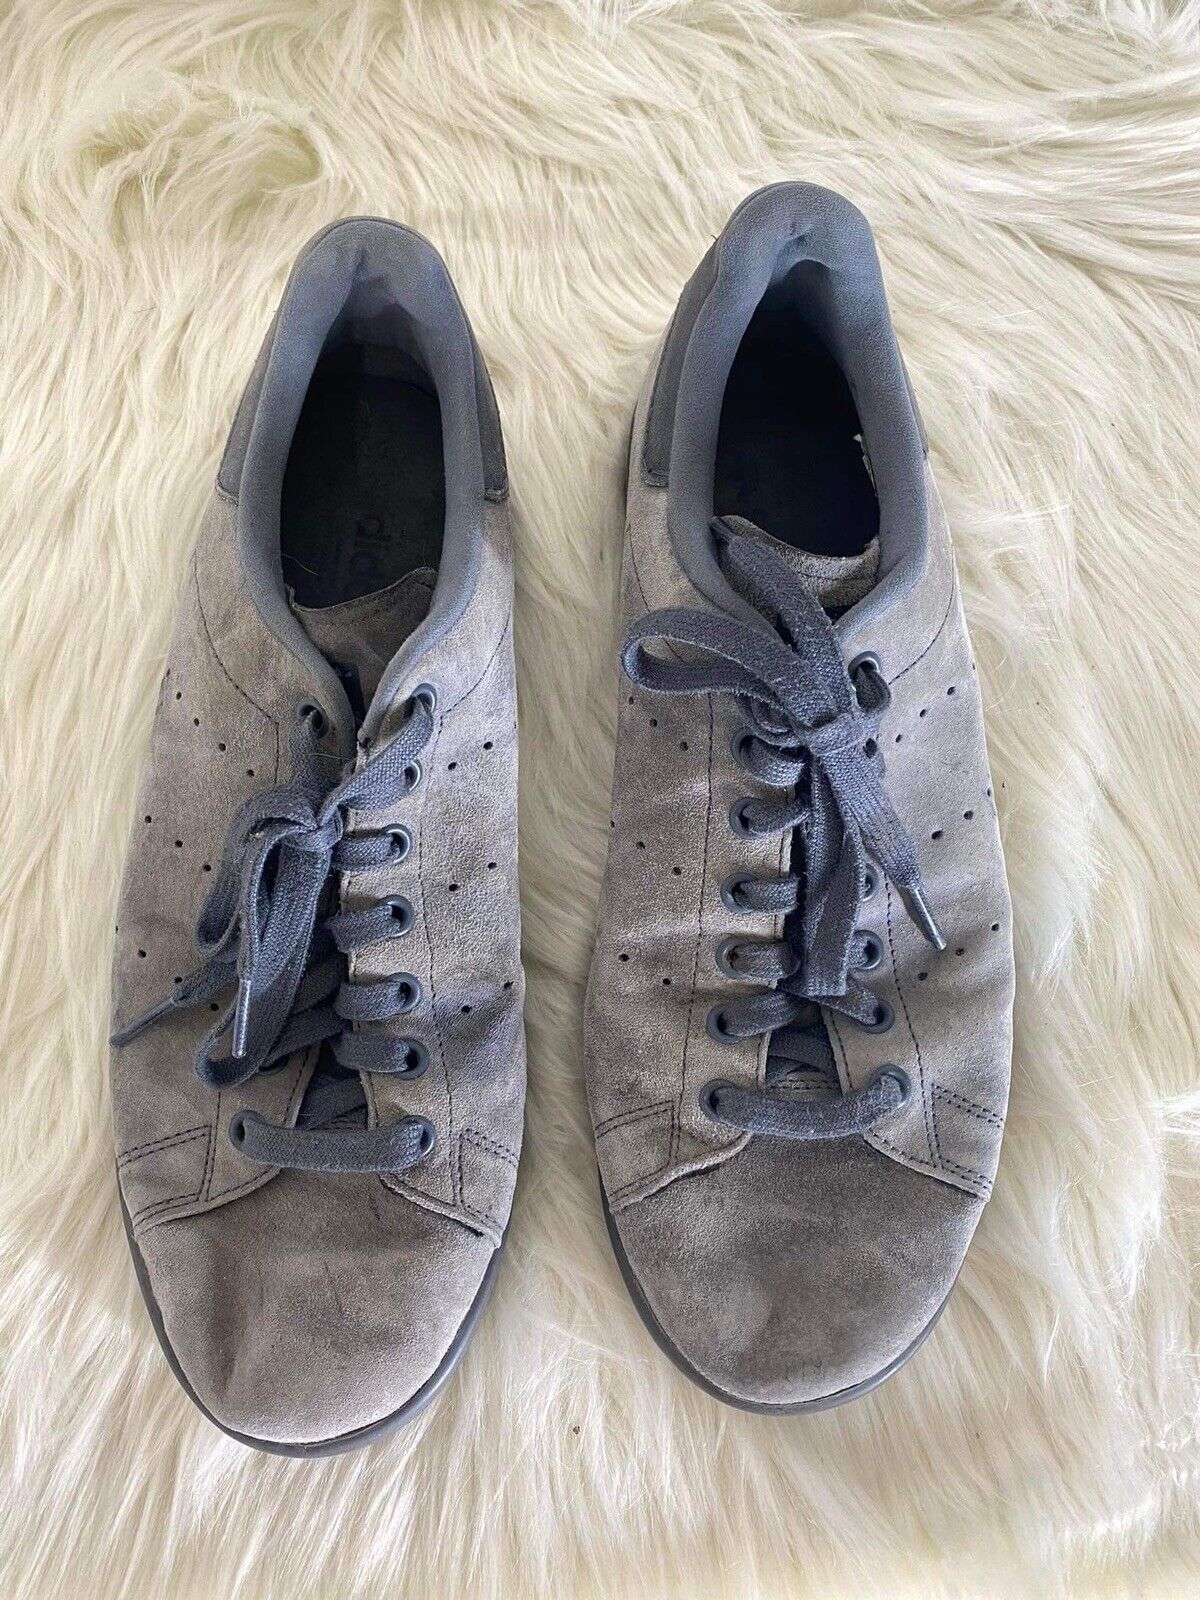 Adidas Smith Onix Grey Sneaker Shoes | eBay